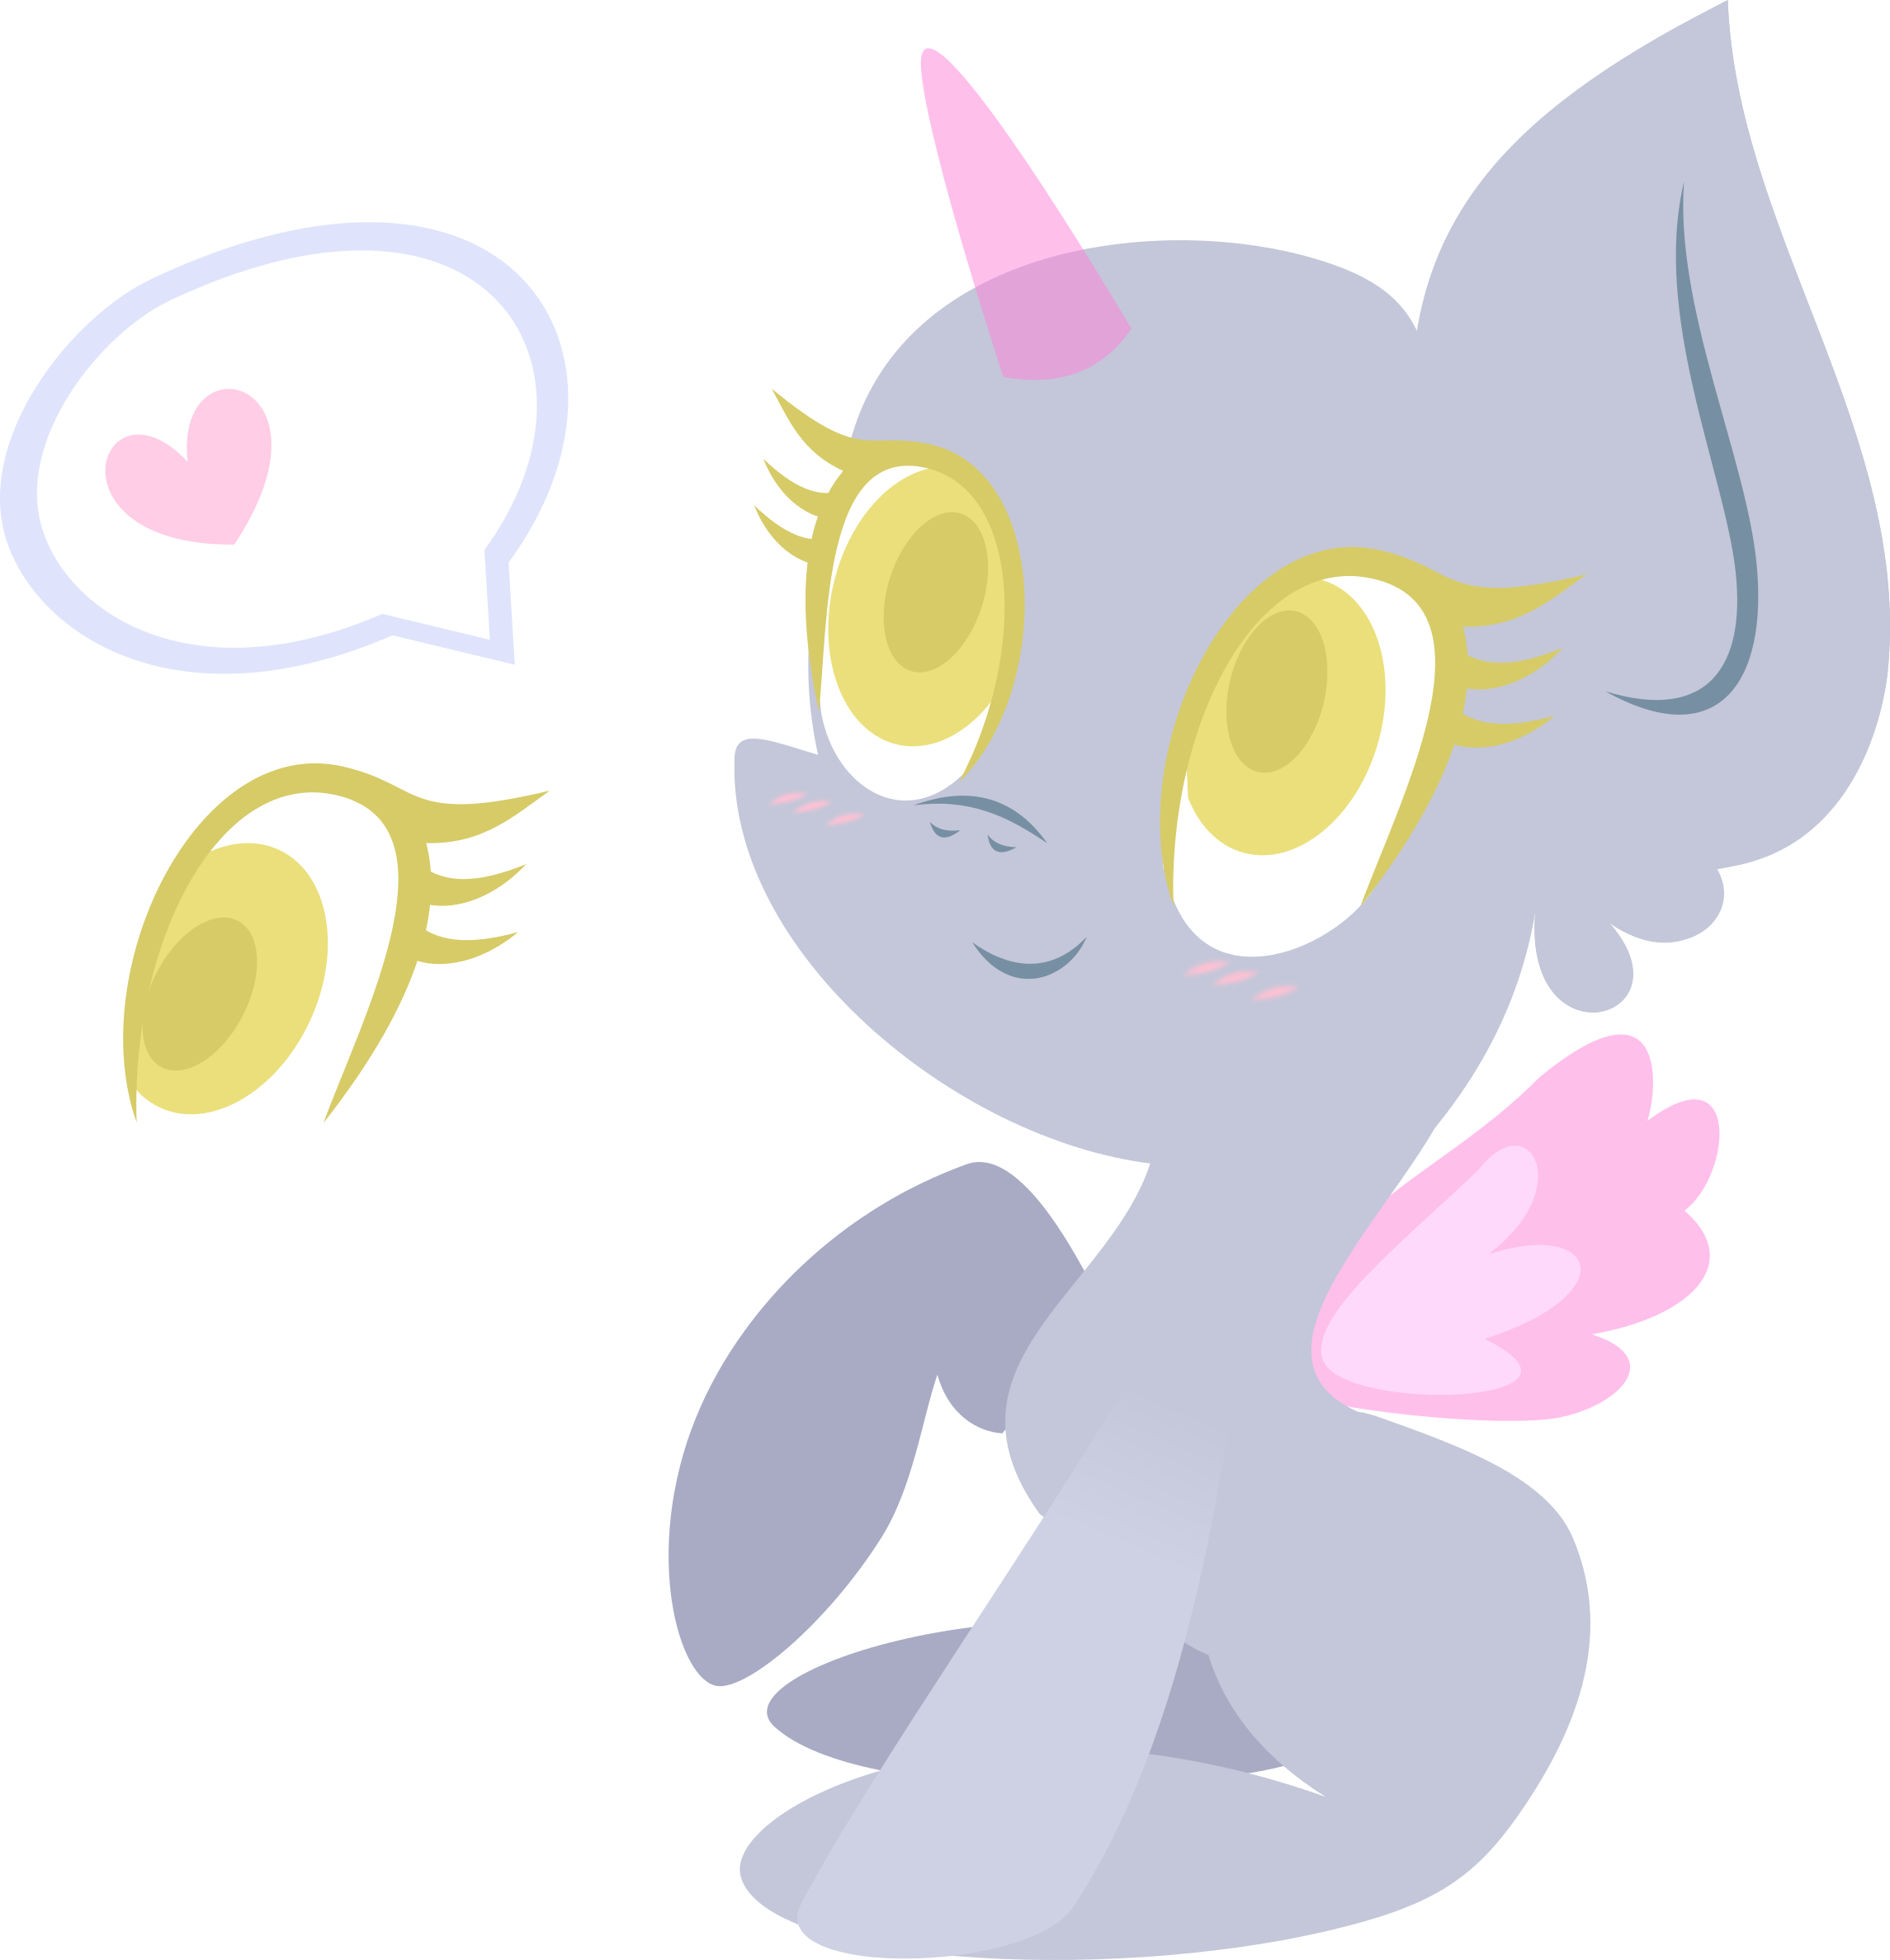 Mlp Base: Cute chibi pony by DarkPinkMonster on DeviantArt